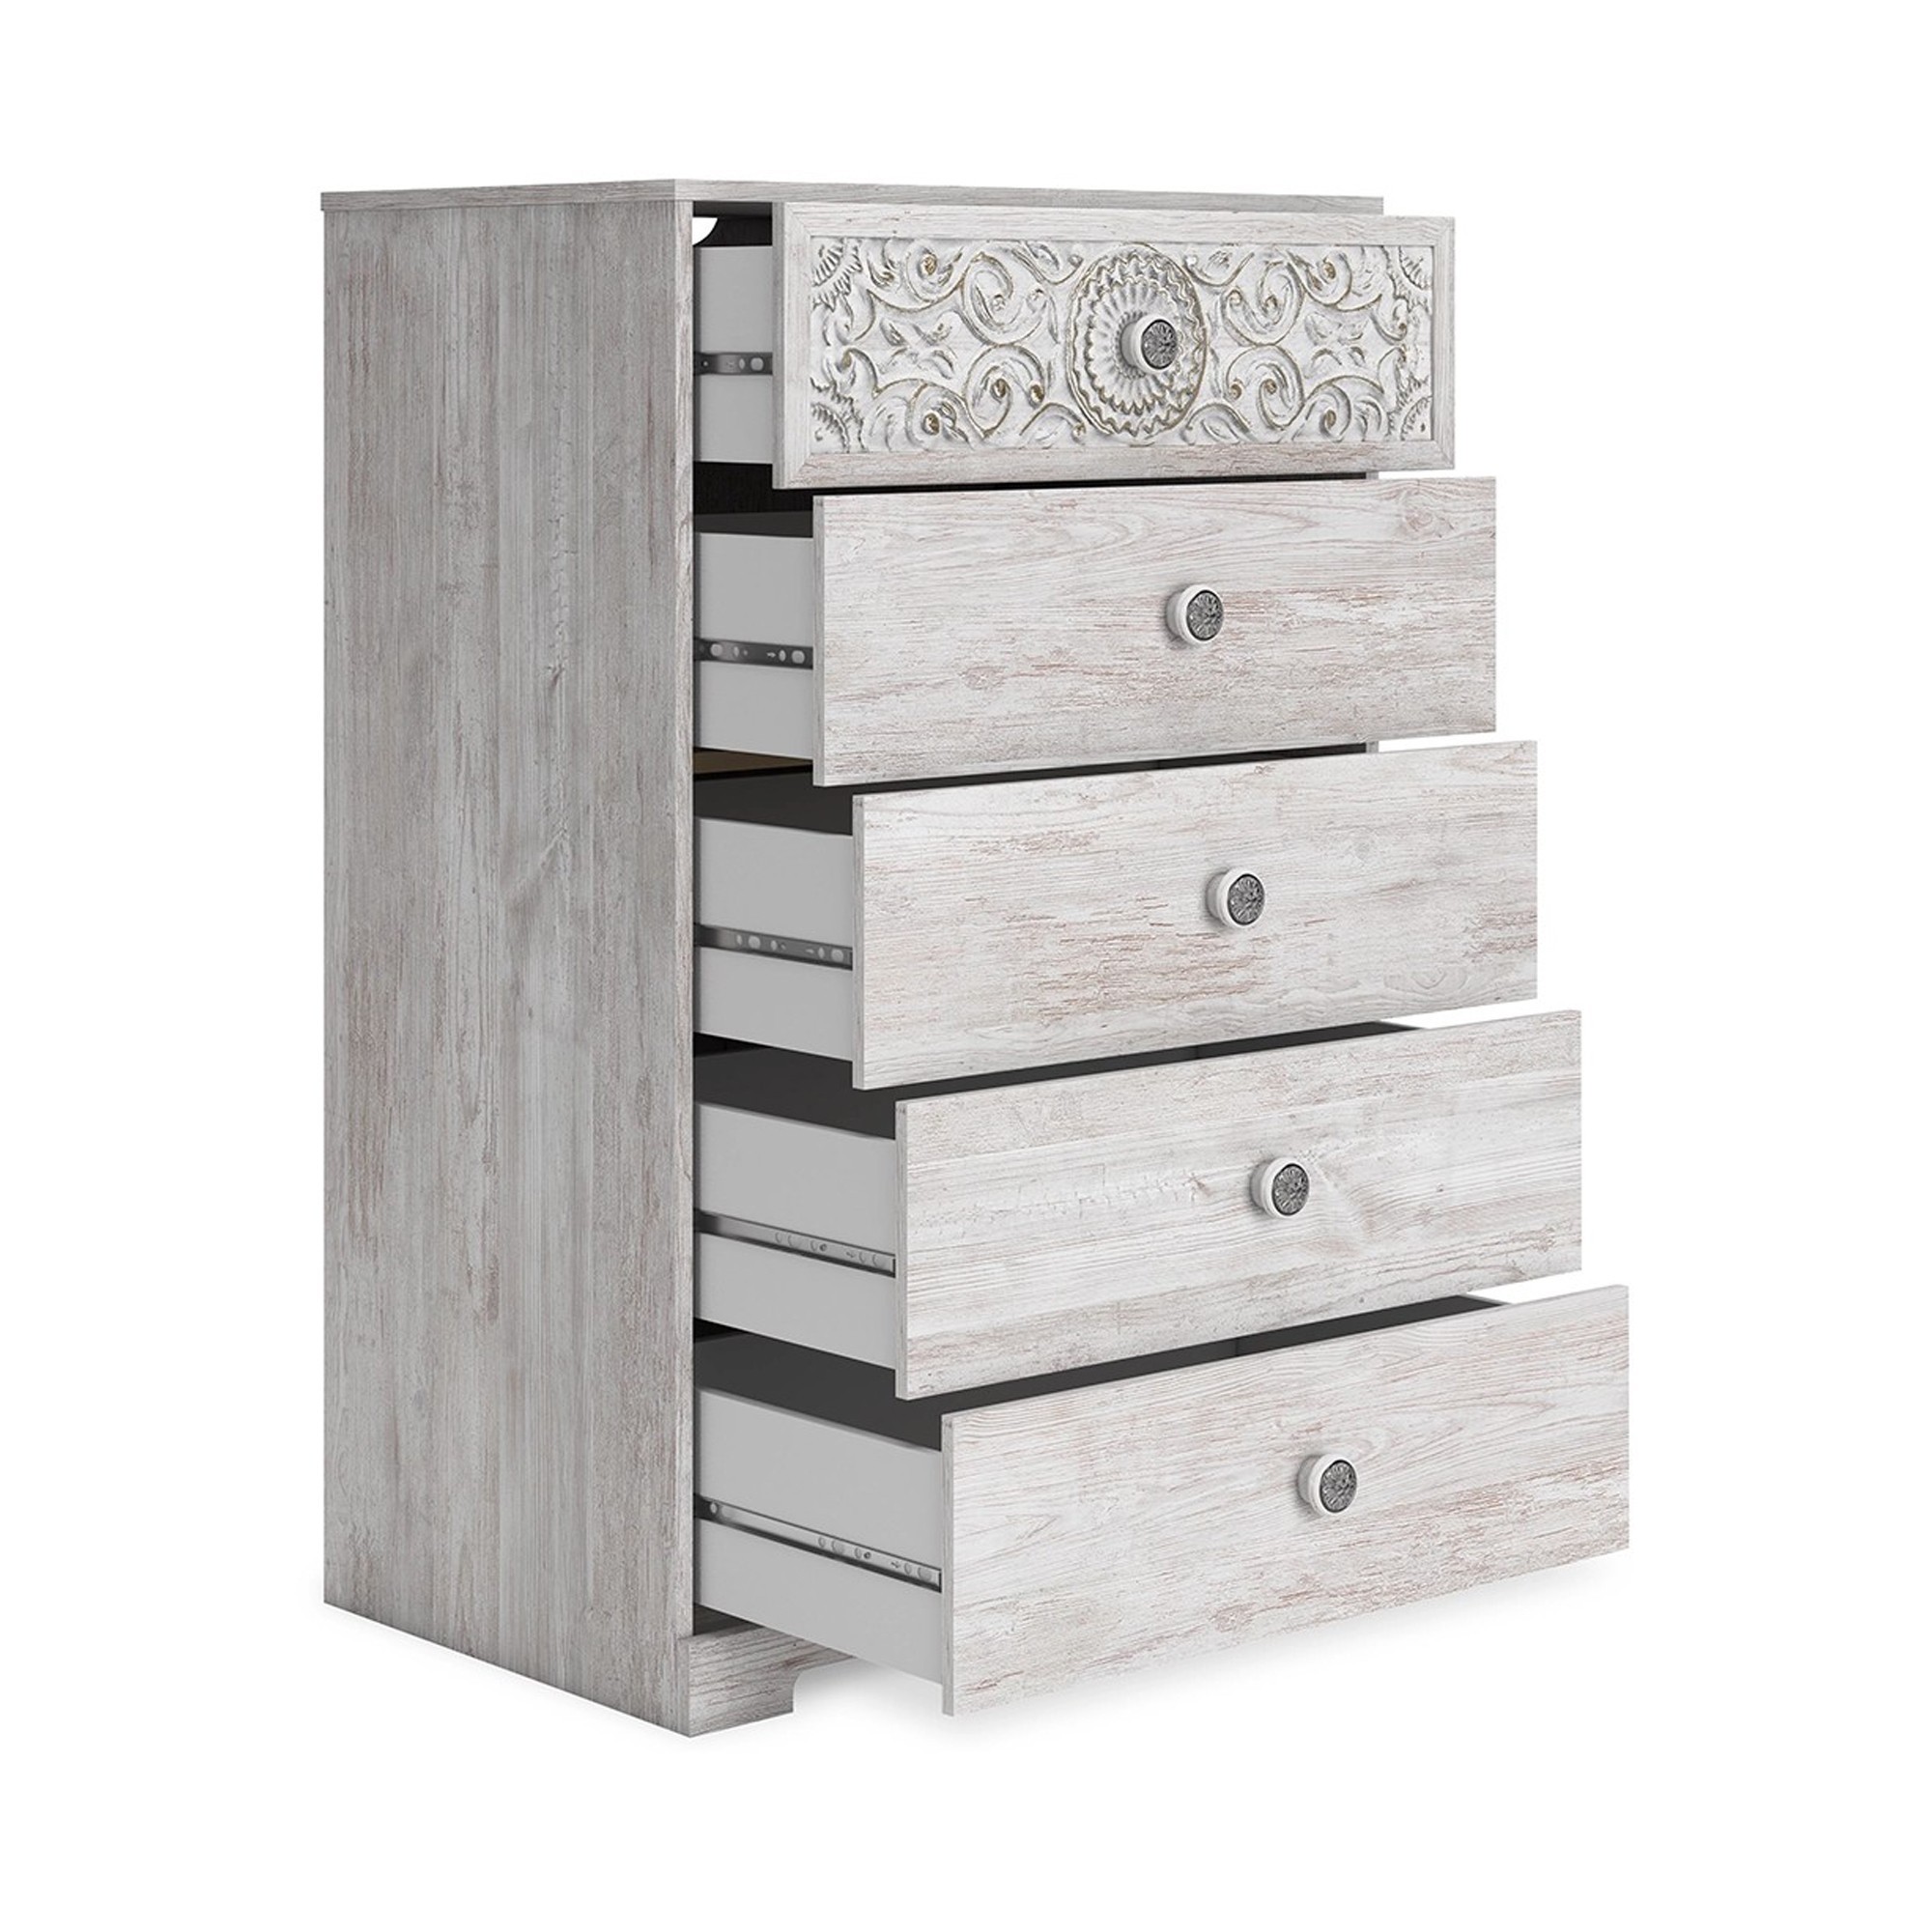 46 Inch 5 Drawer Modern Tall Dresser Chest, Whitewashed Carved Design Wood- Saltoro Sherpi